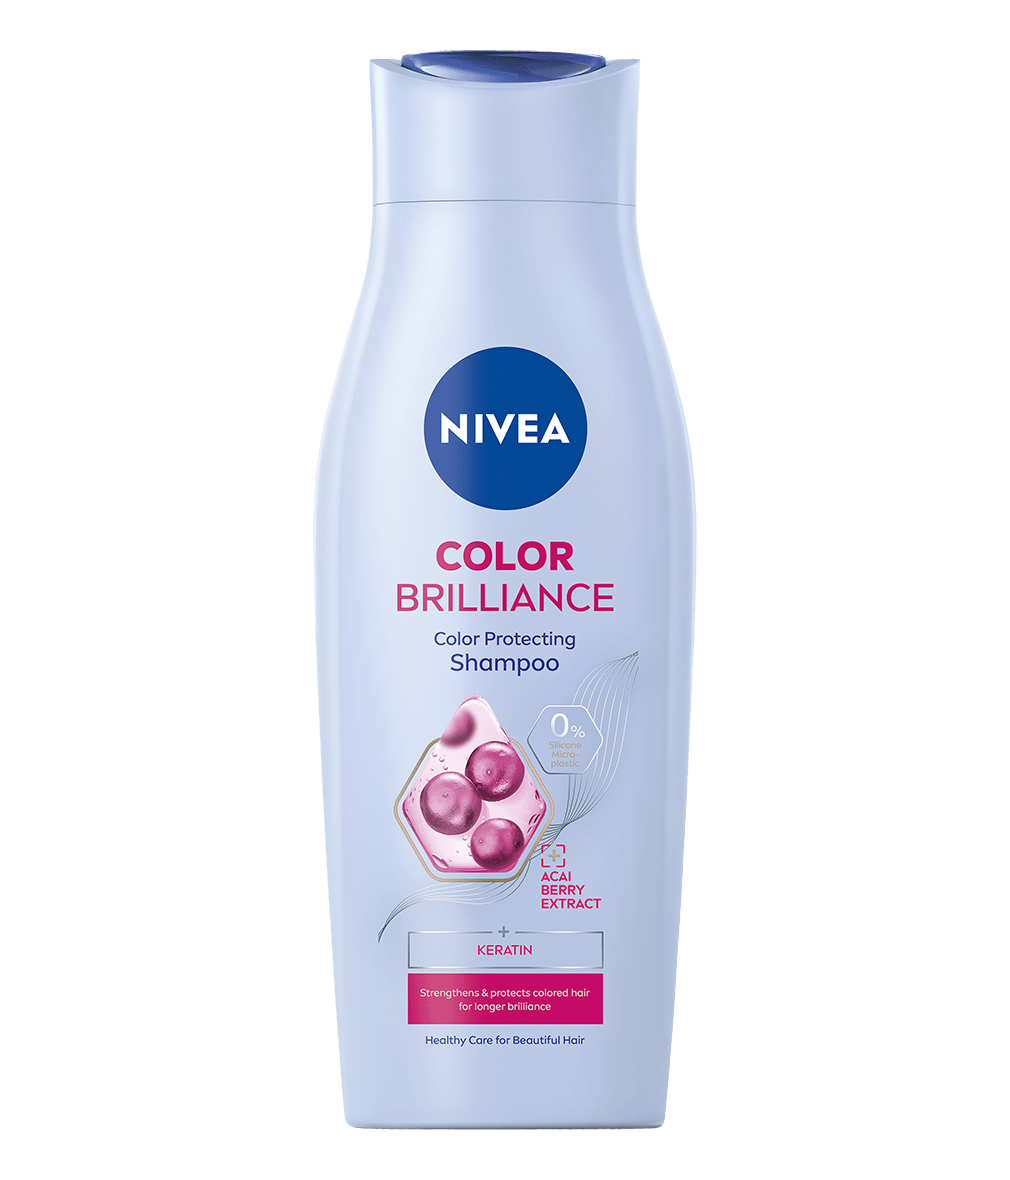 szampon brilliant color nivea